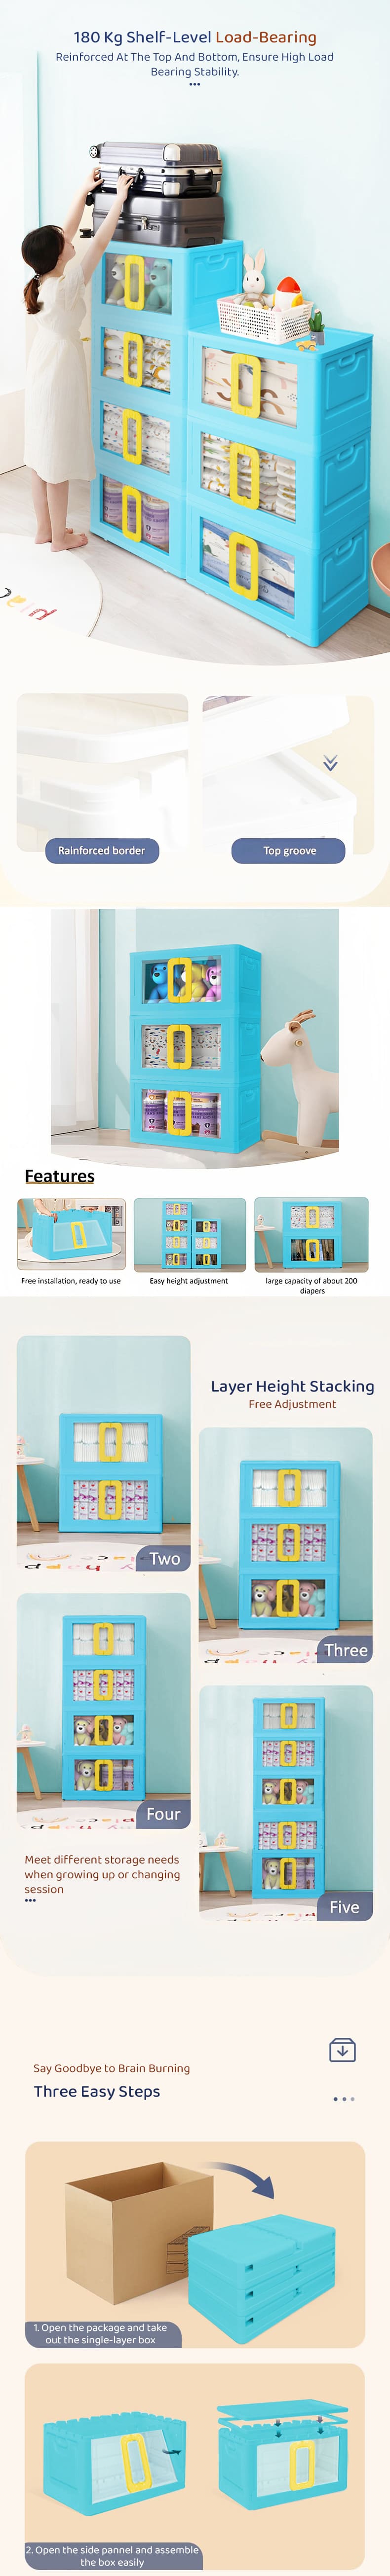 Multi-Functional Kids Storage Cabinet